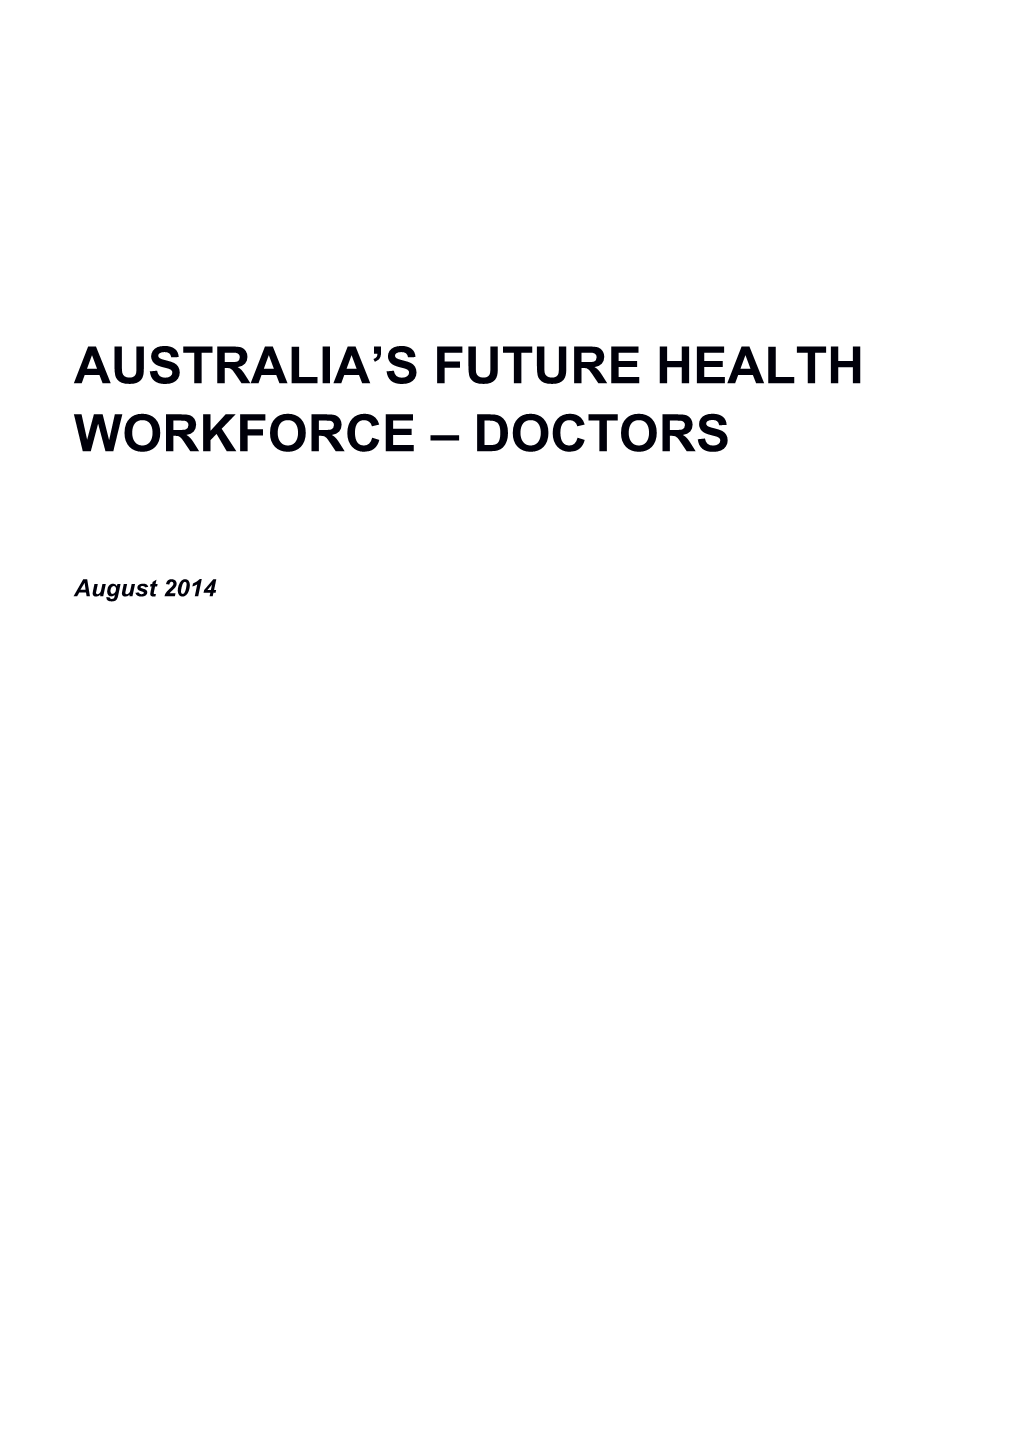 Australia's Future Health Workforce: Doctors